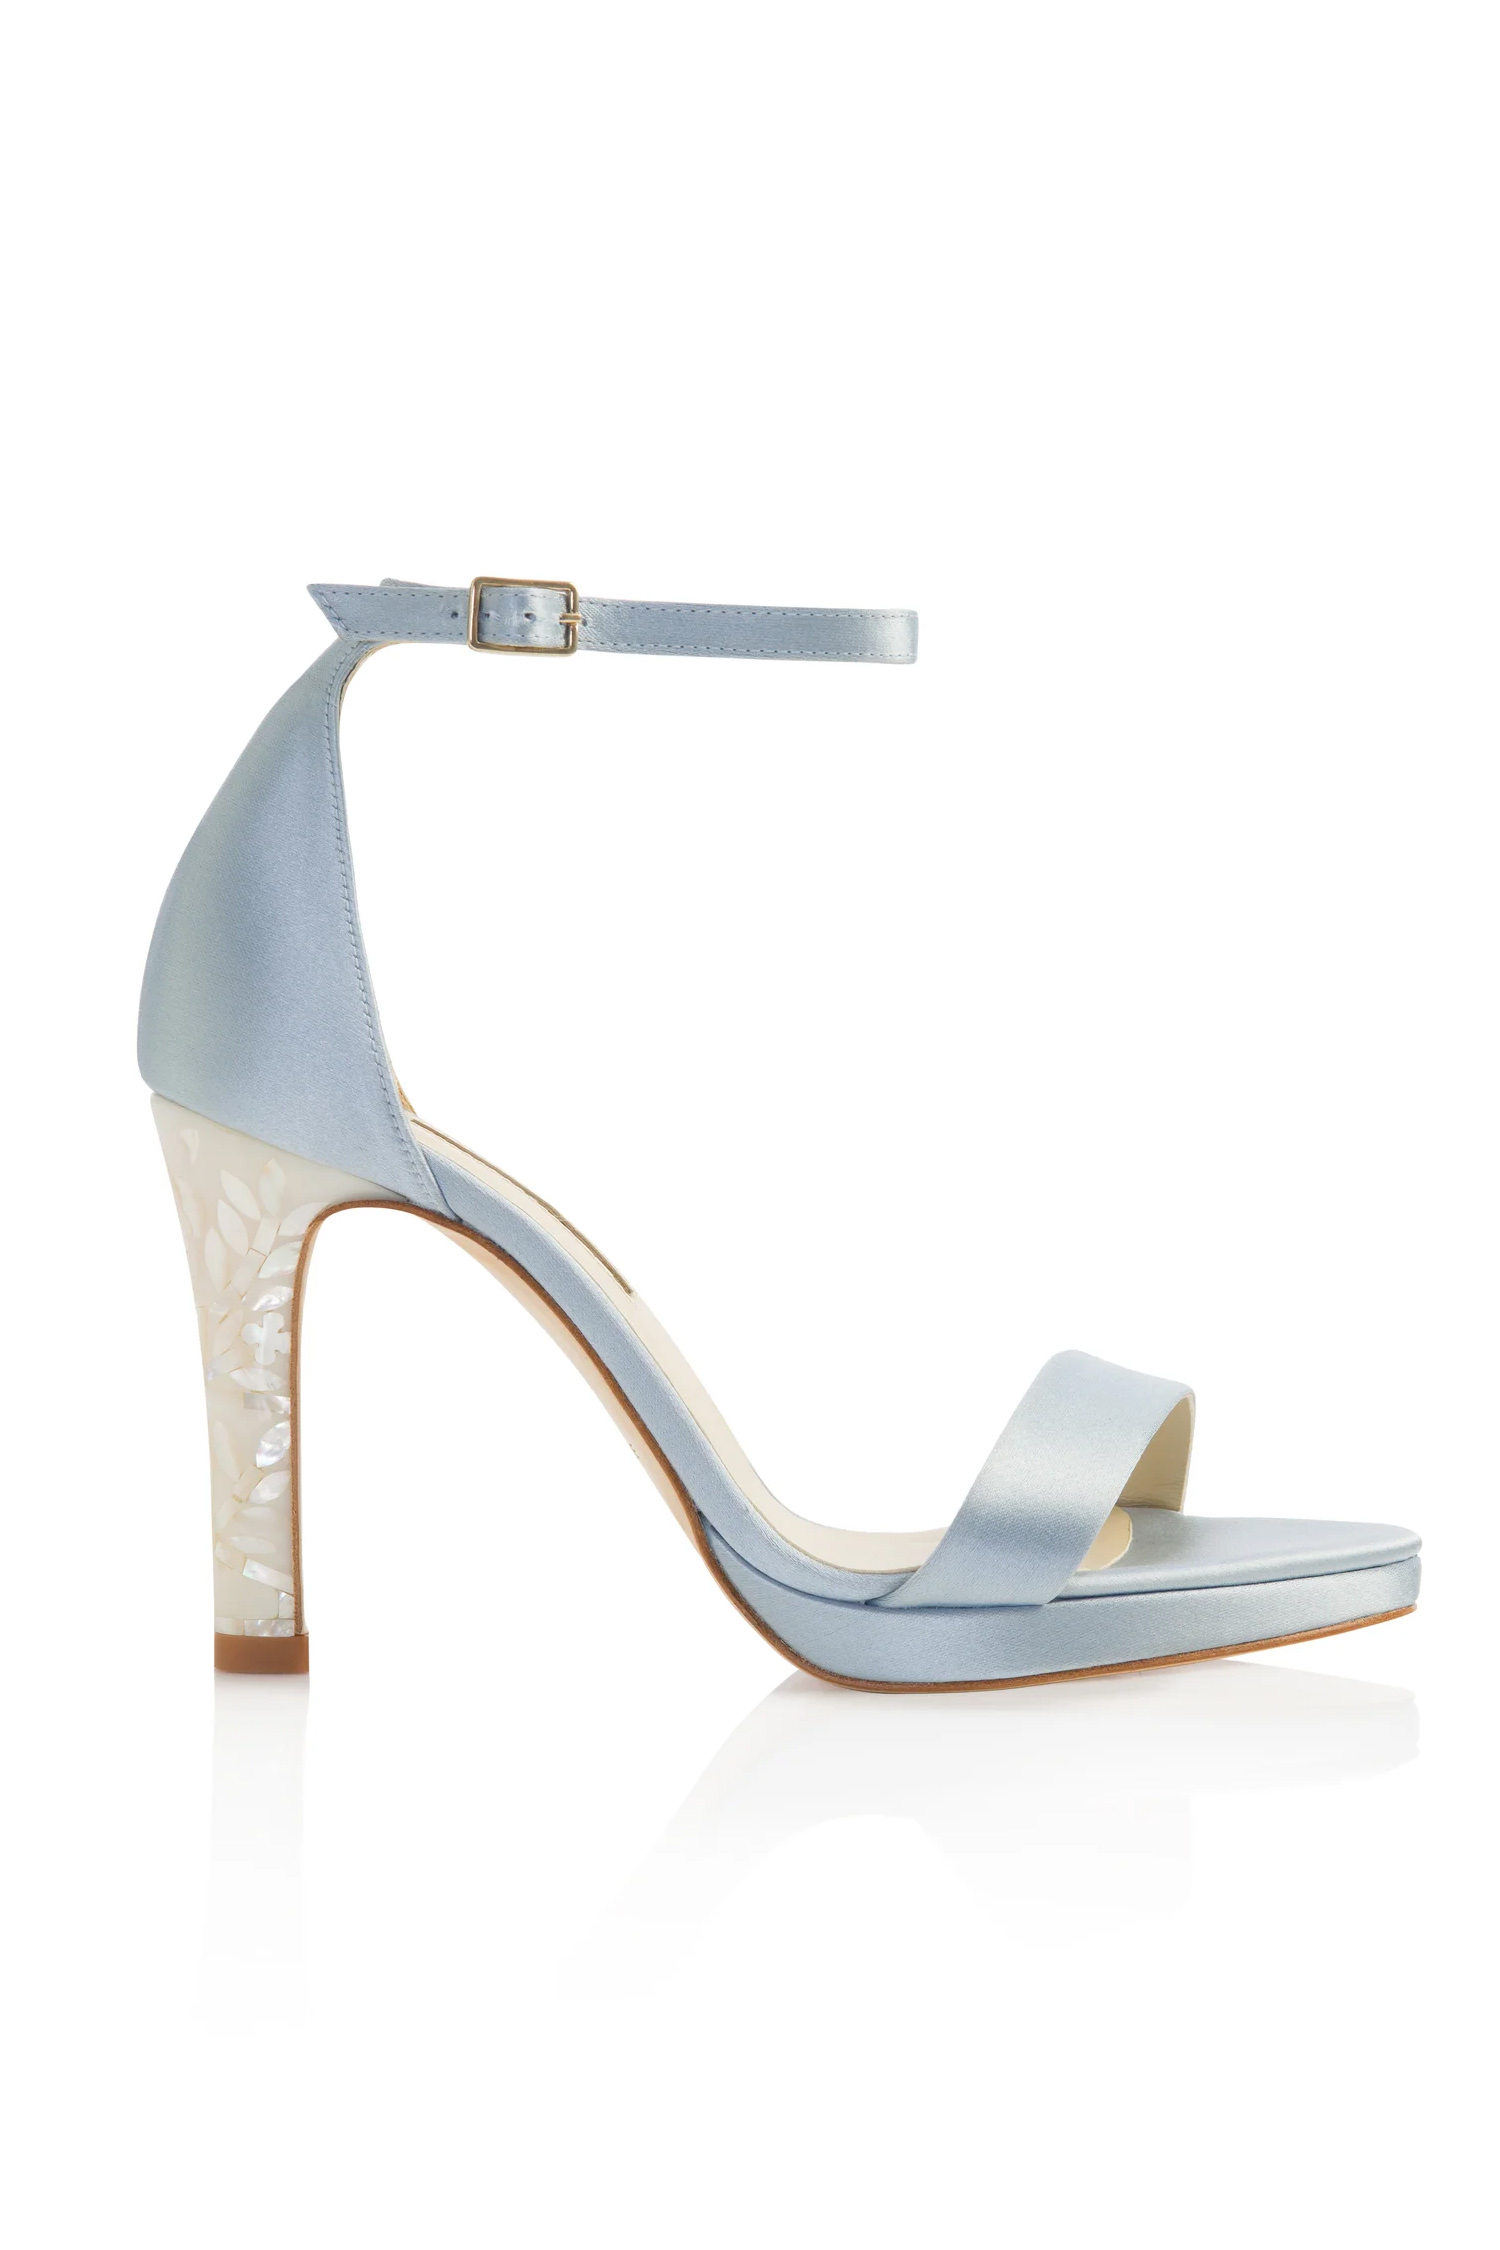 High heel pale blue wedding shoes by Freya Rose London